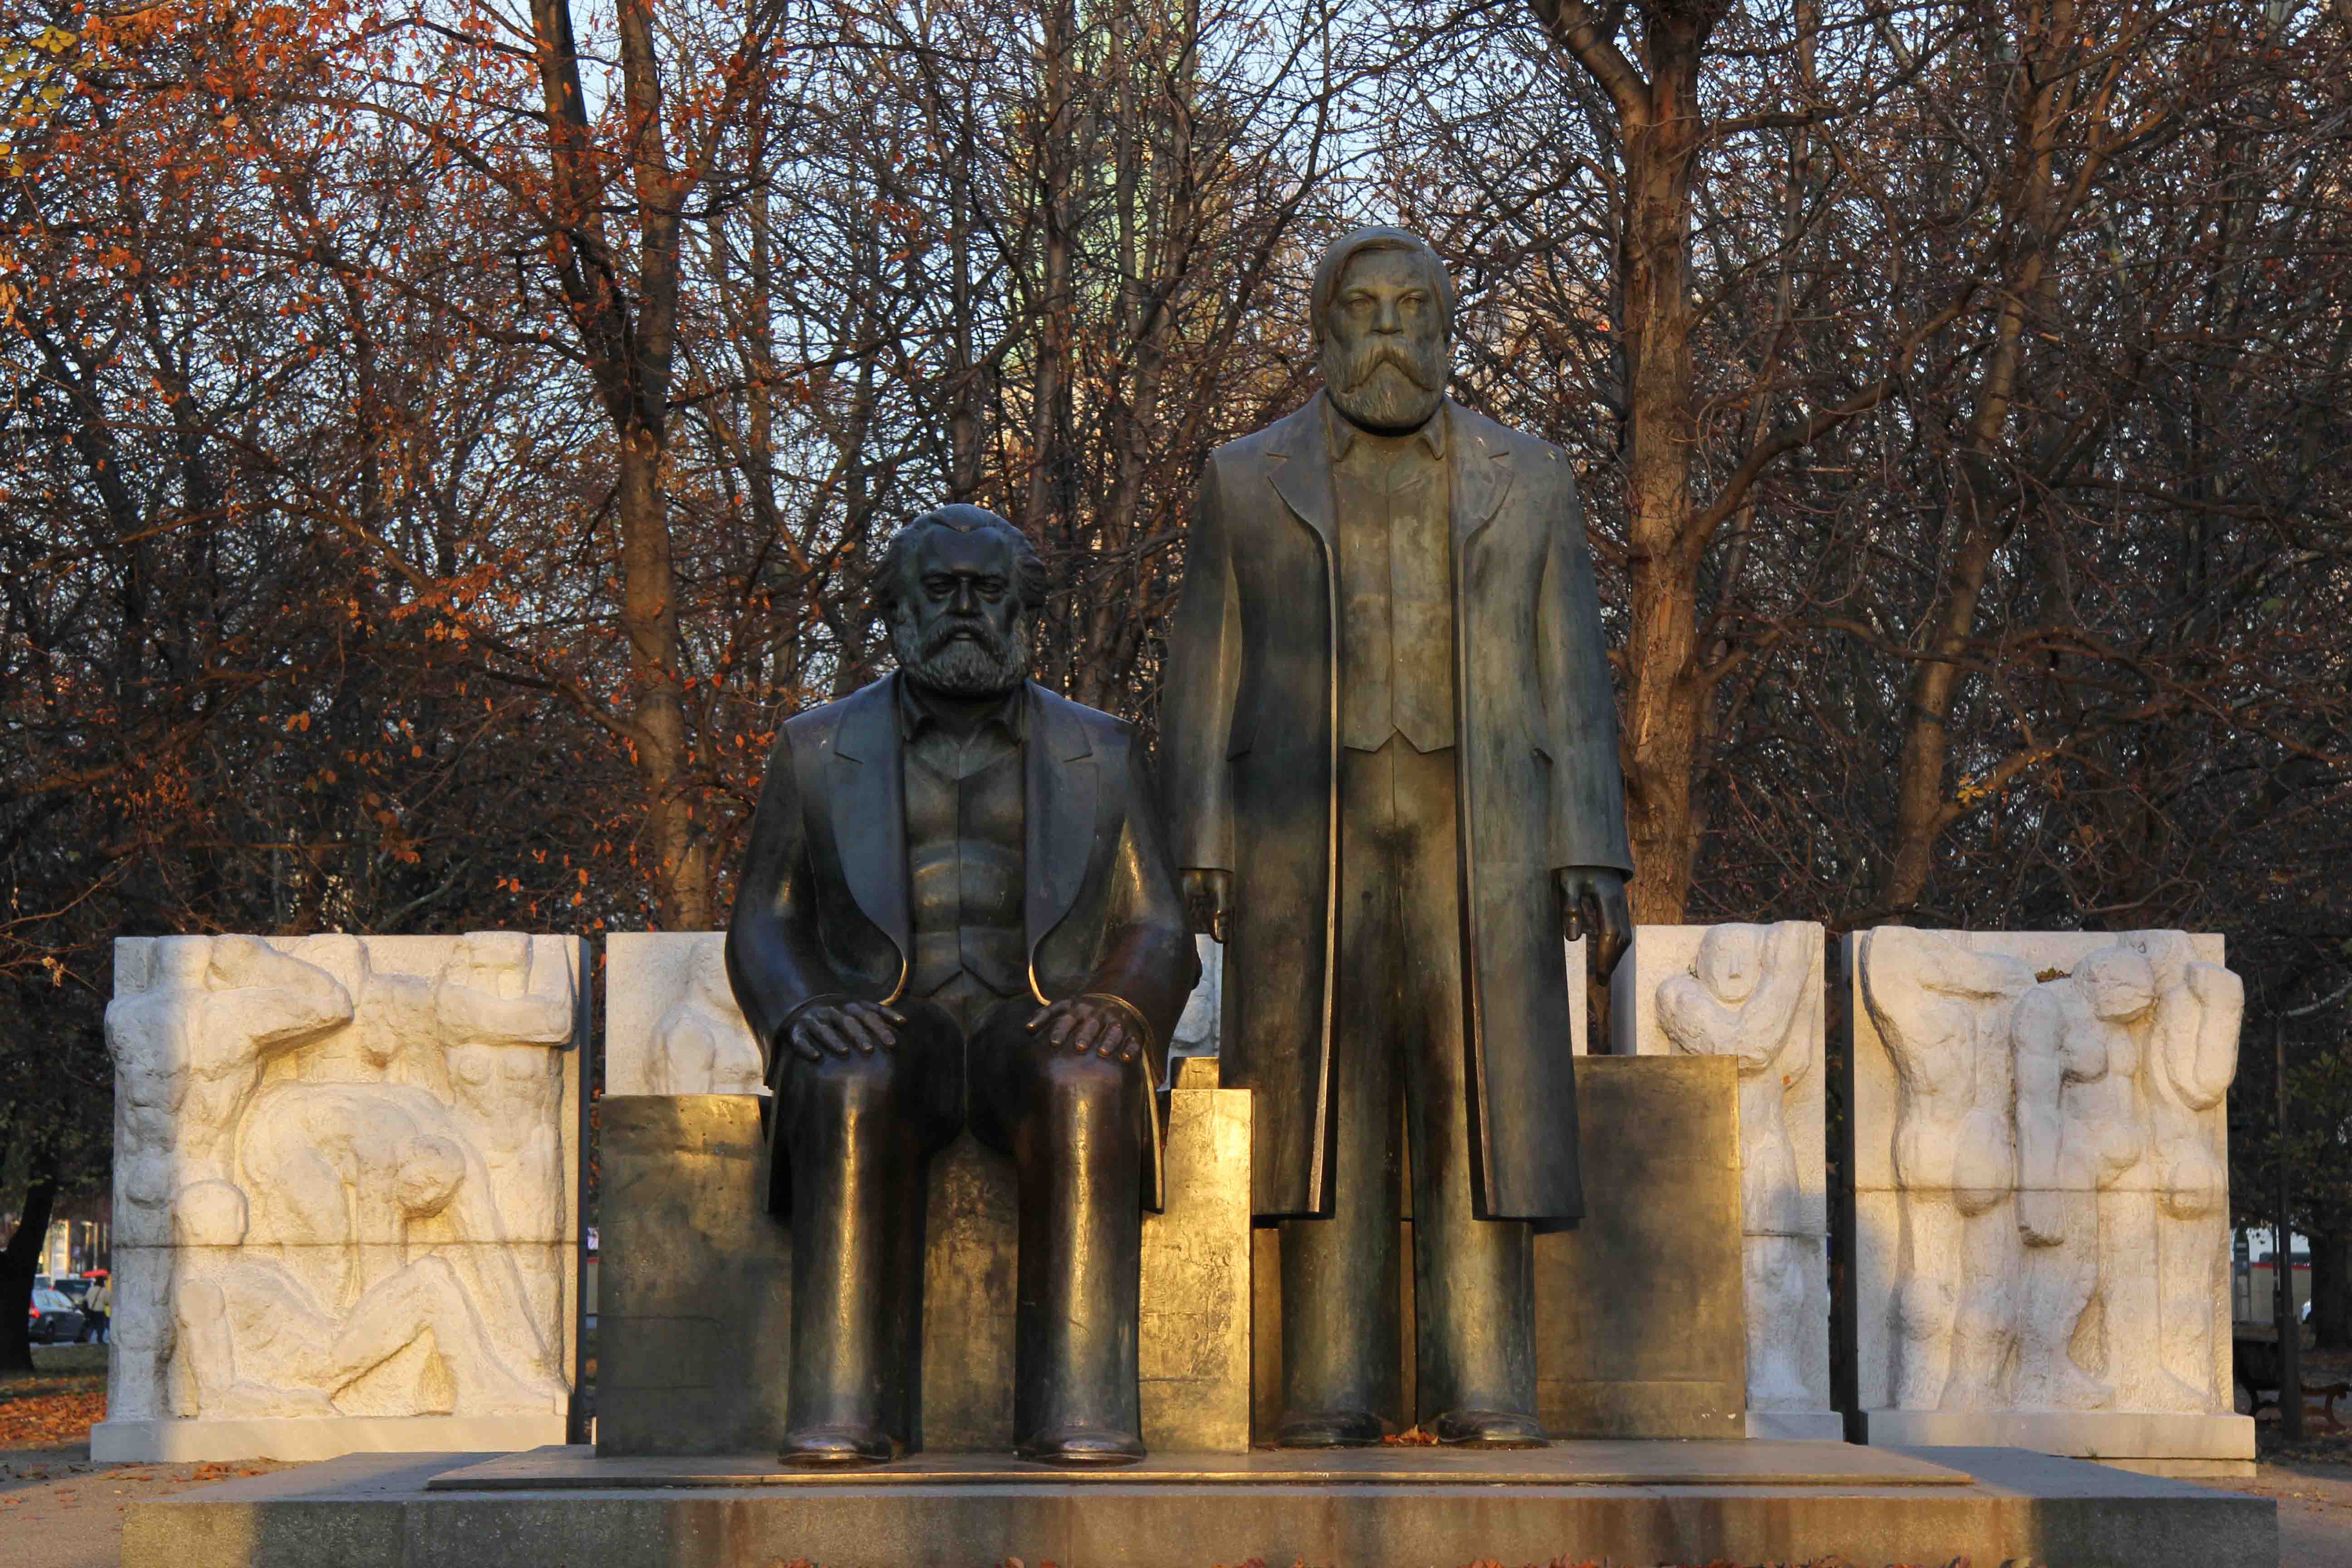 Marx-Engels-Forum Berlin - statue of Karl Marx and Friedrich Engels